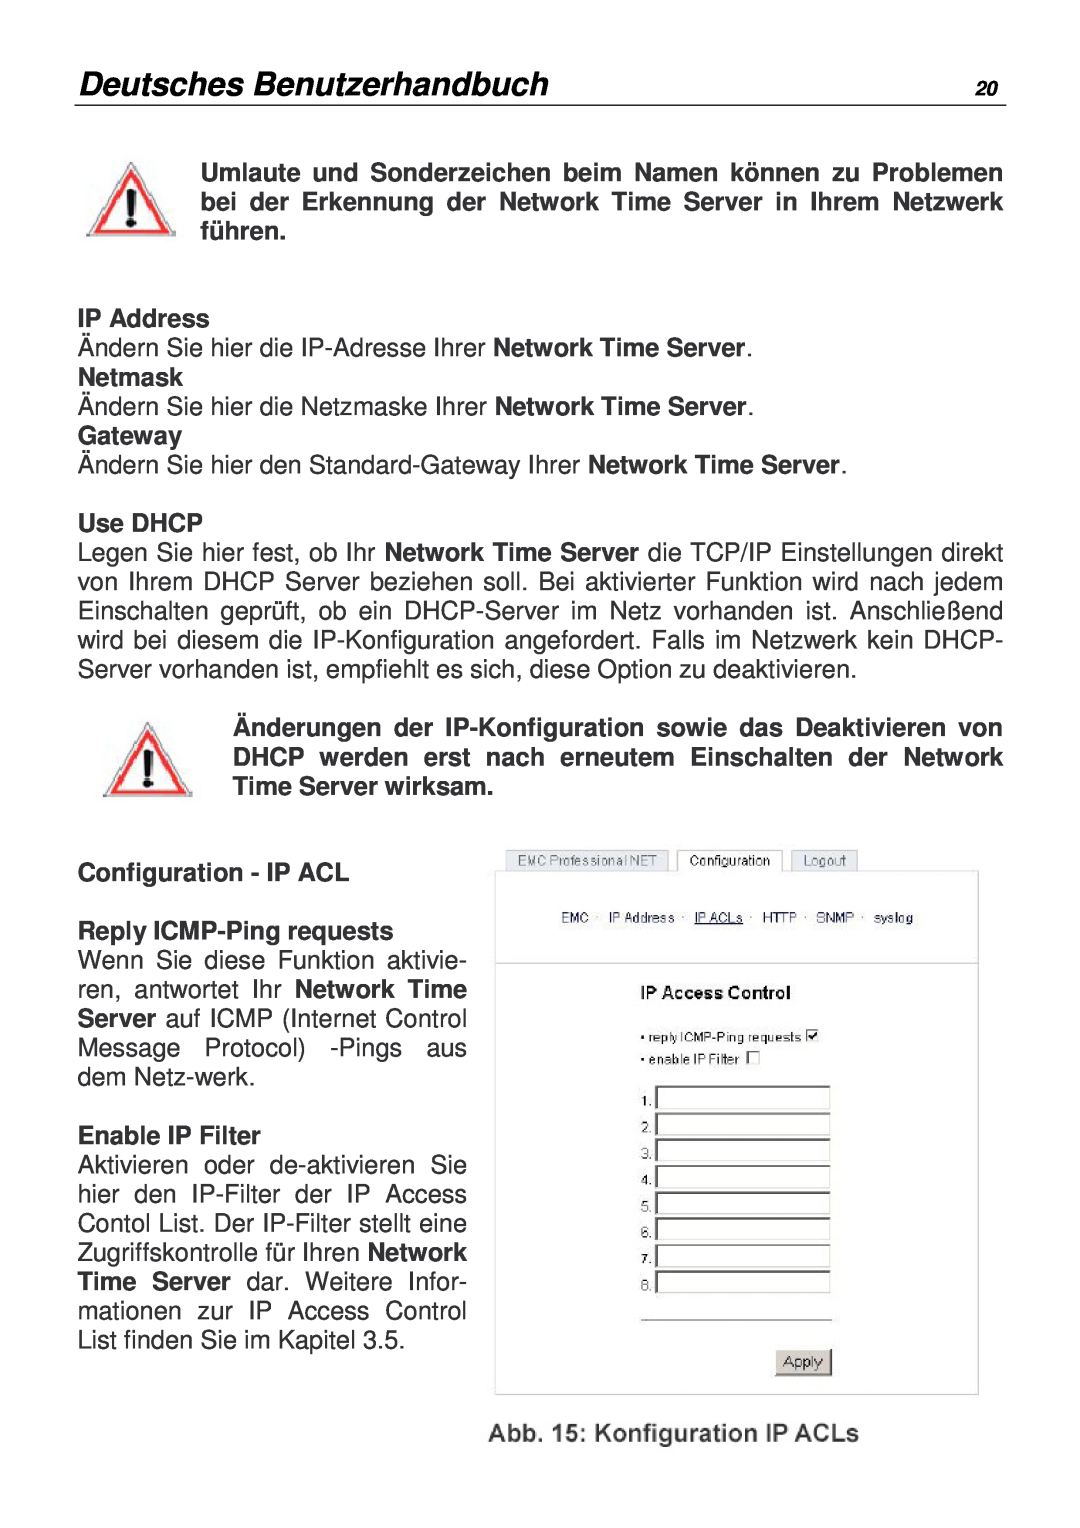 Lindy 20988 Deutsches Benutzerhandbuch, IP Address, Netmask, Gateway, Use DHCP, Configuration - IP ACL, Enable IP Filter 